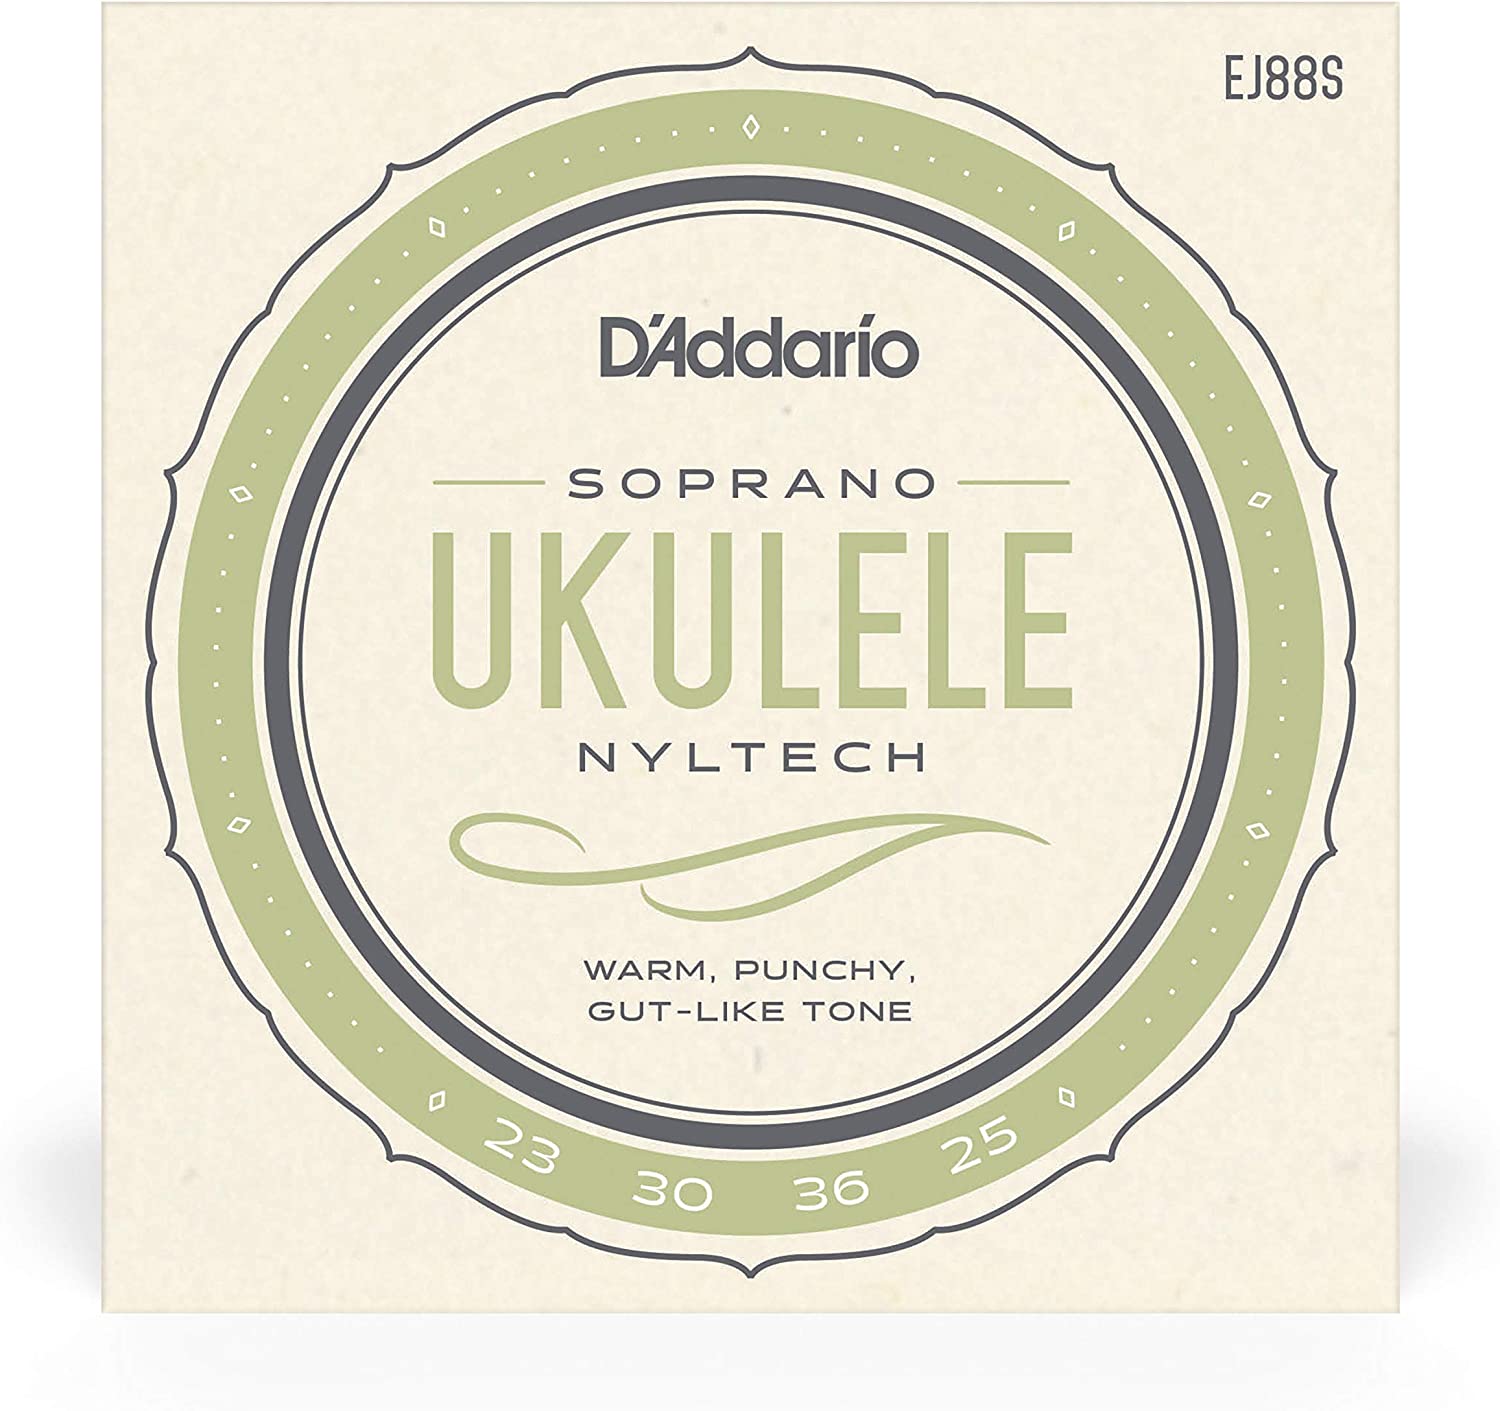 D'Addario Nyltech Ukulele Strings - Soprano | Musical Accessories | Halabh.com